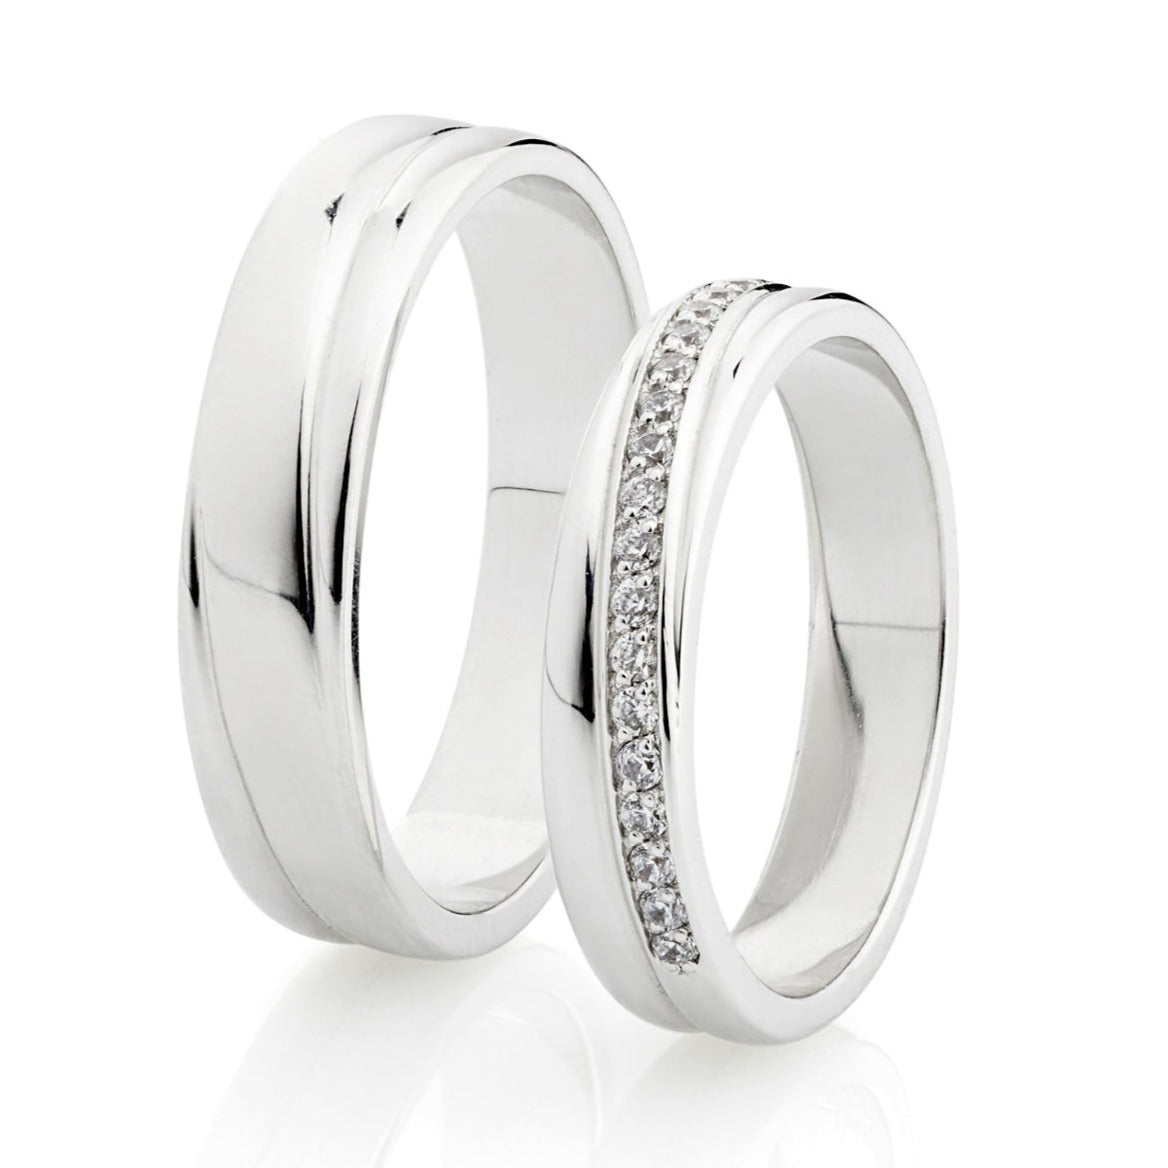 Gold wedding rings set, matching wedding bands, white gold wedding ring with diamonds